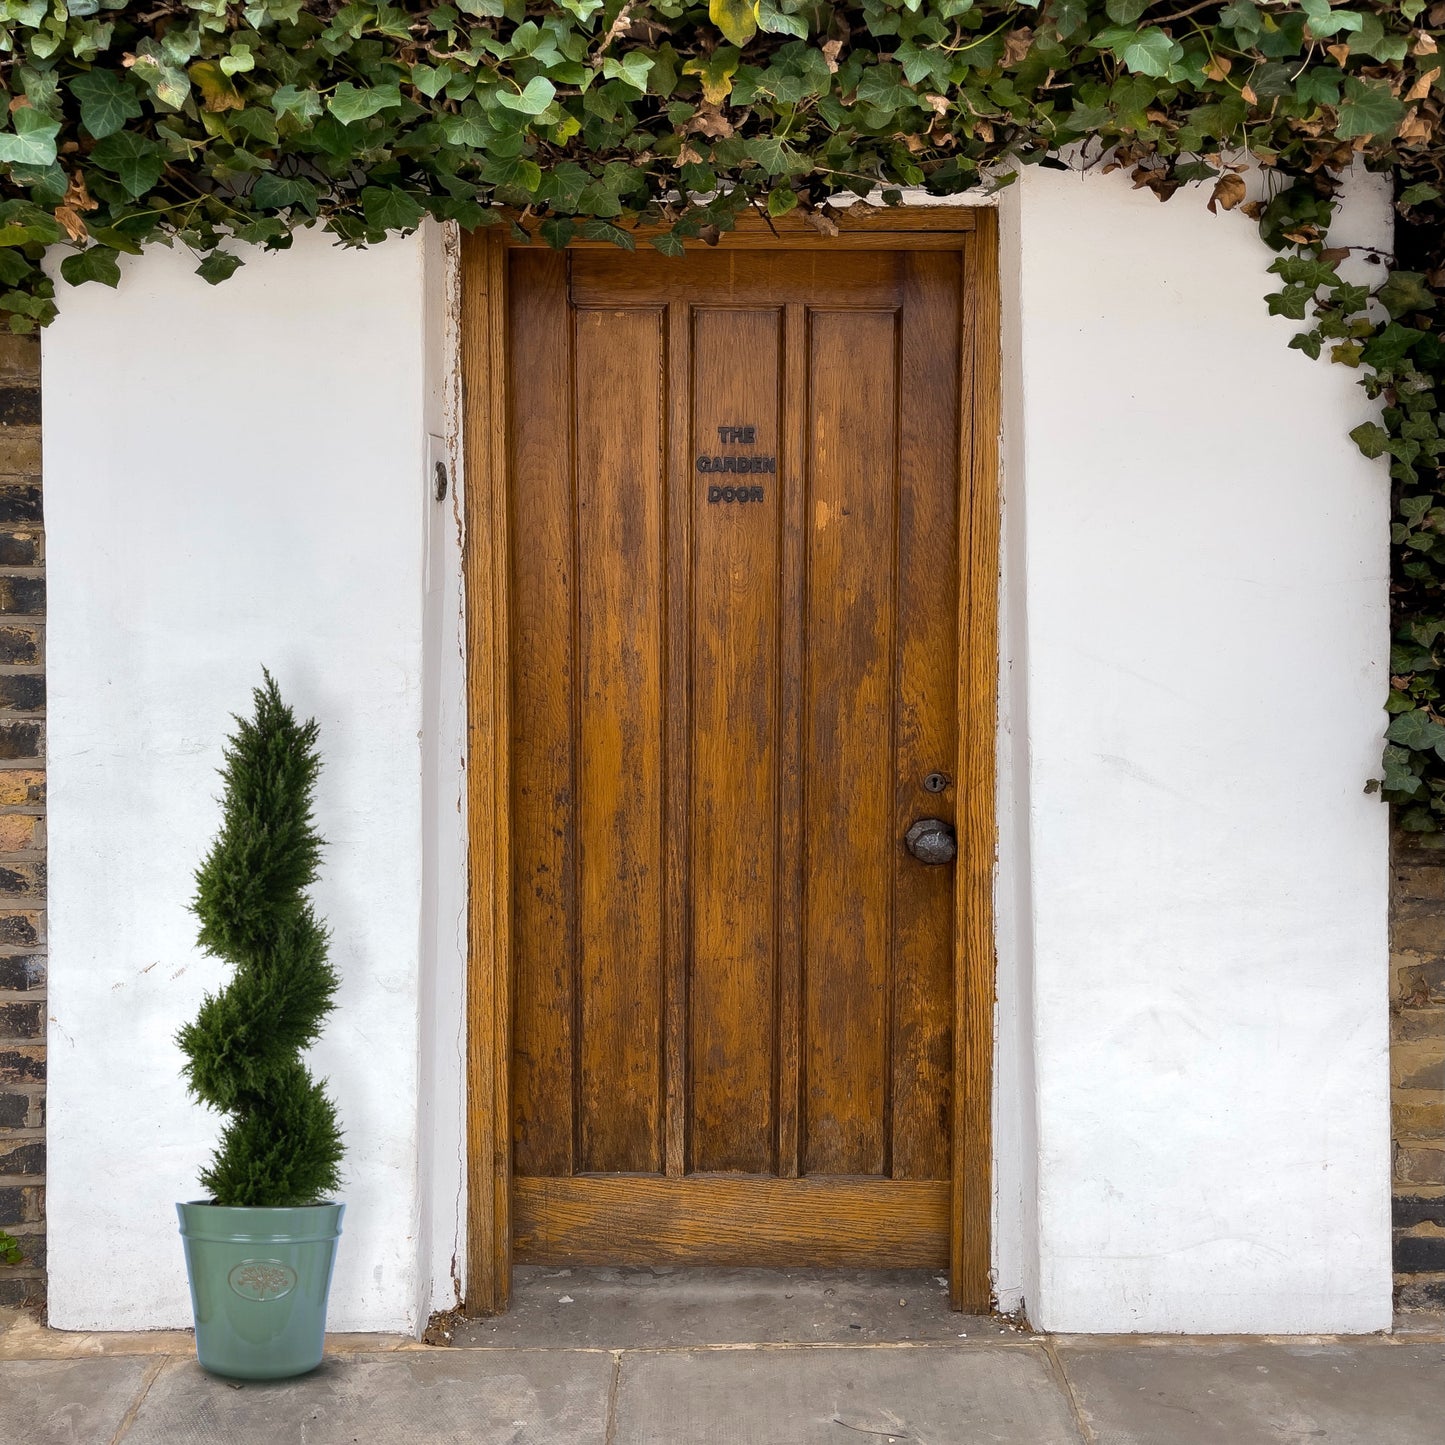 Cypress Spiral Topiary Tree by Door